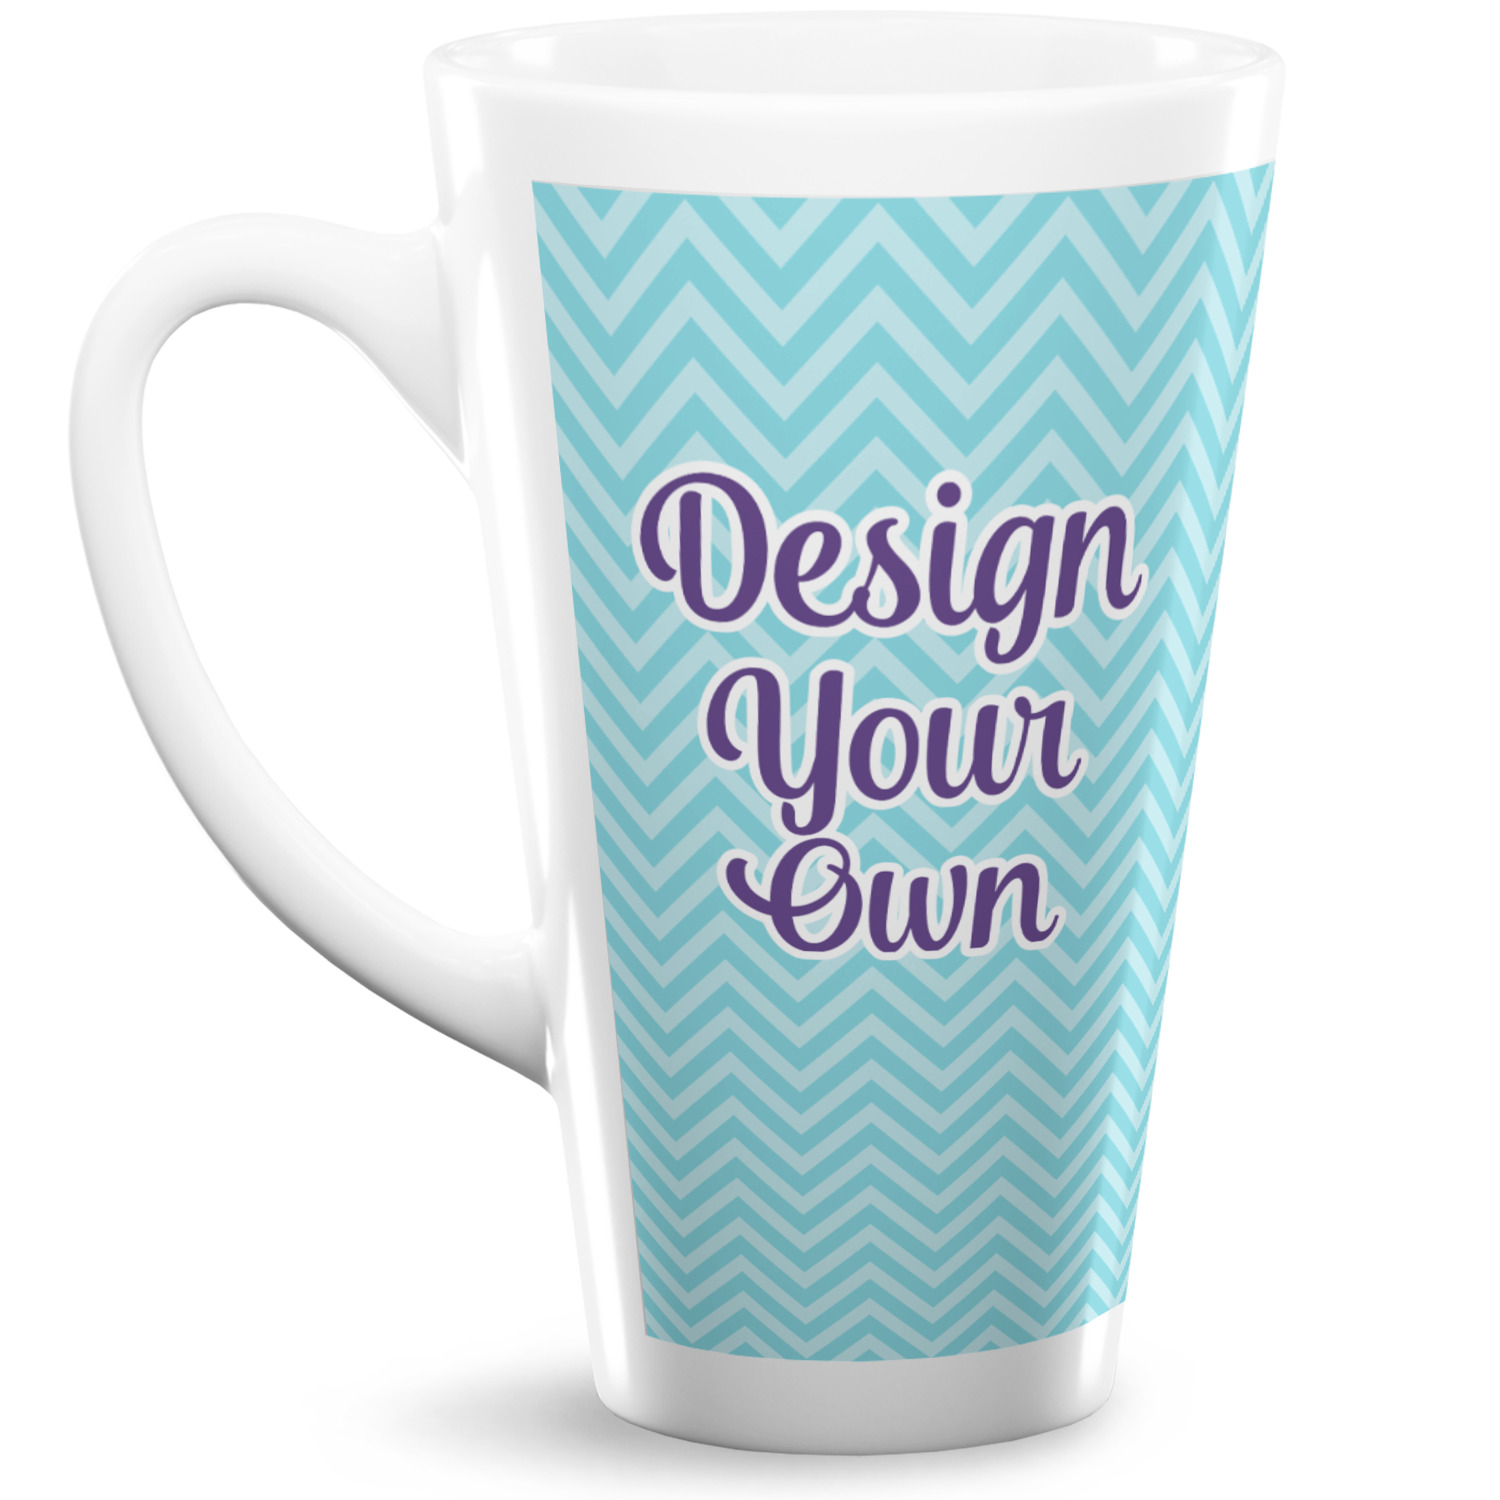 https://www.youcustomizeit.com/common/MAKE/965833/Design-Your-Own-16-Oz-Latte-Mug-Front.jpg?lm=1695828002